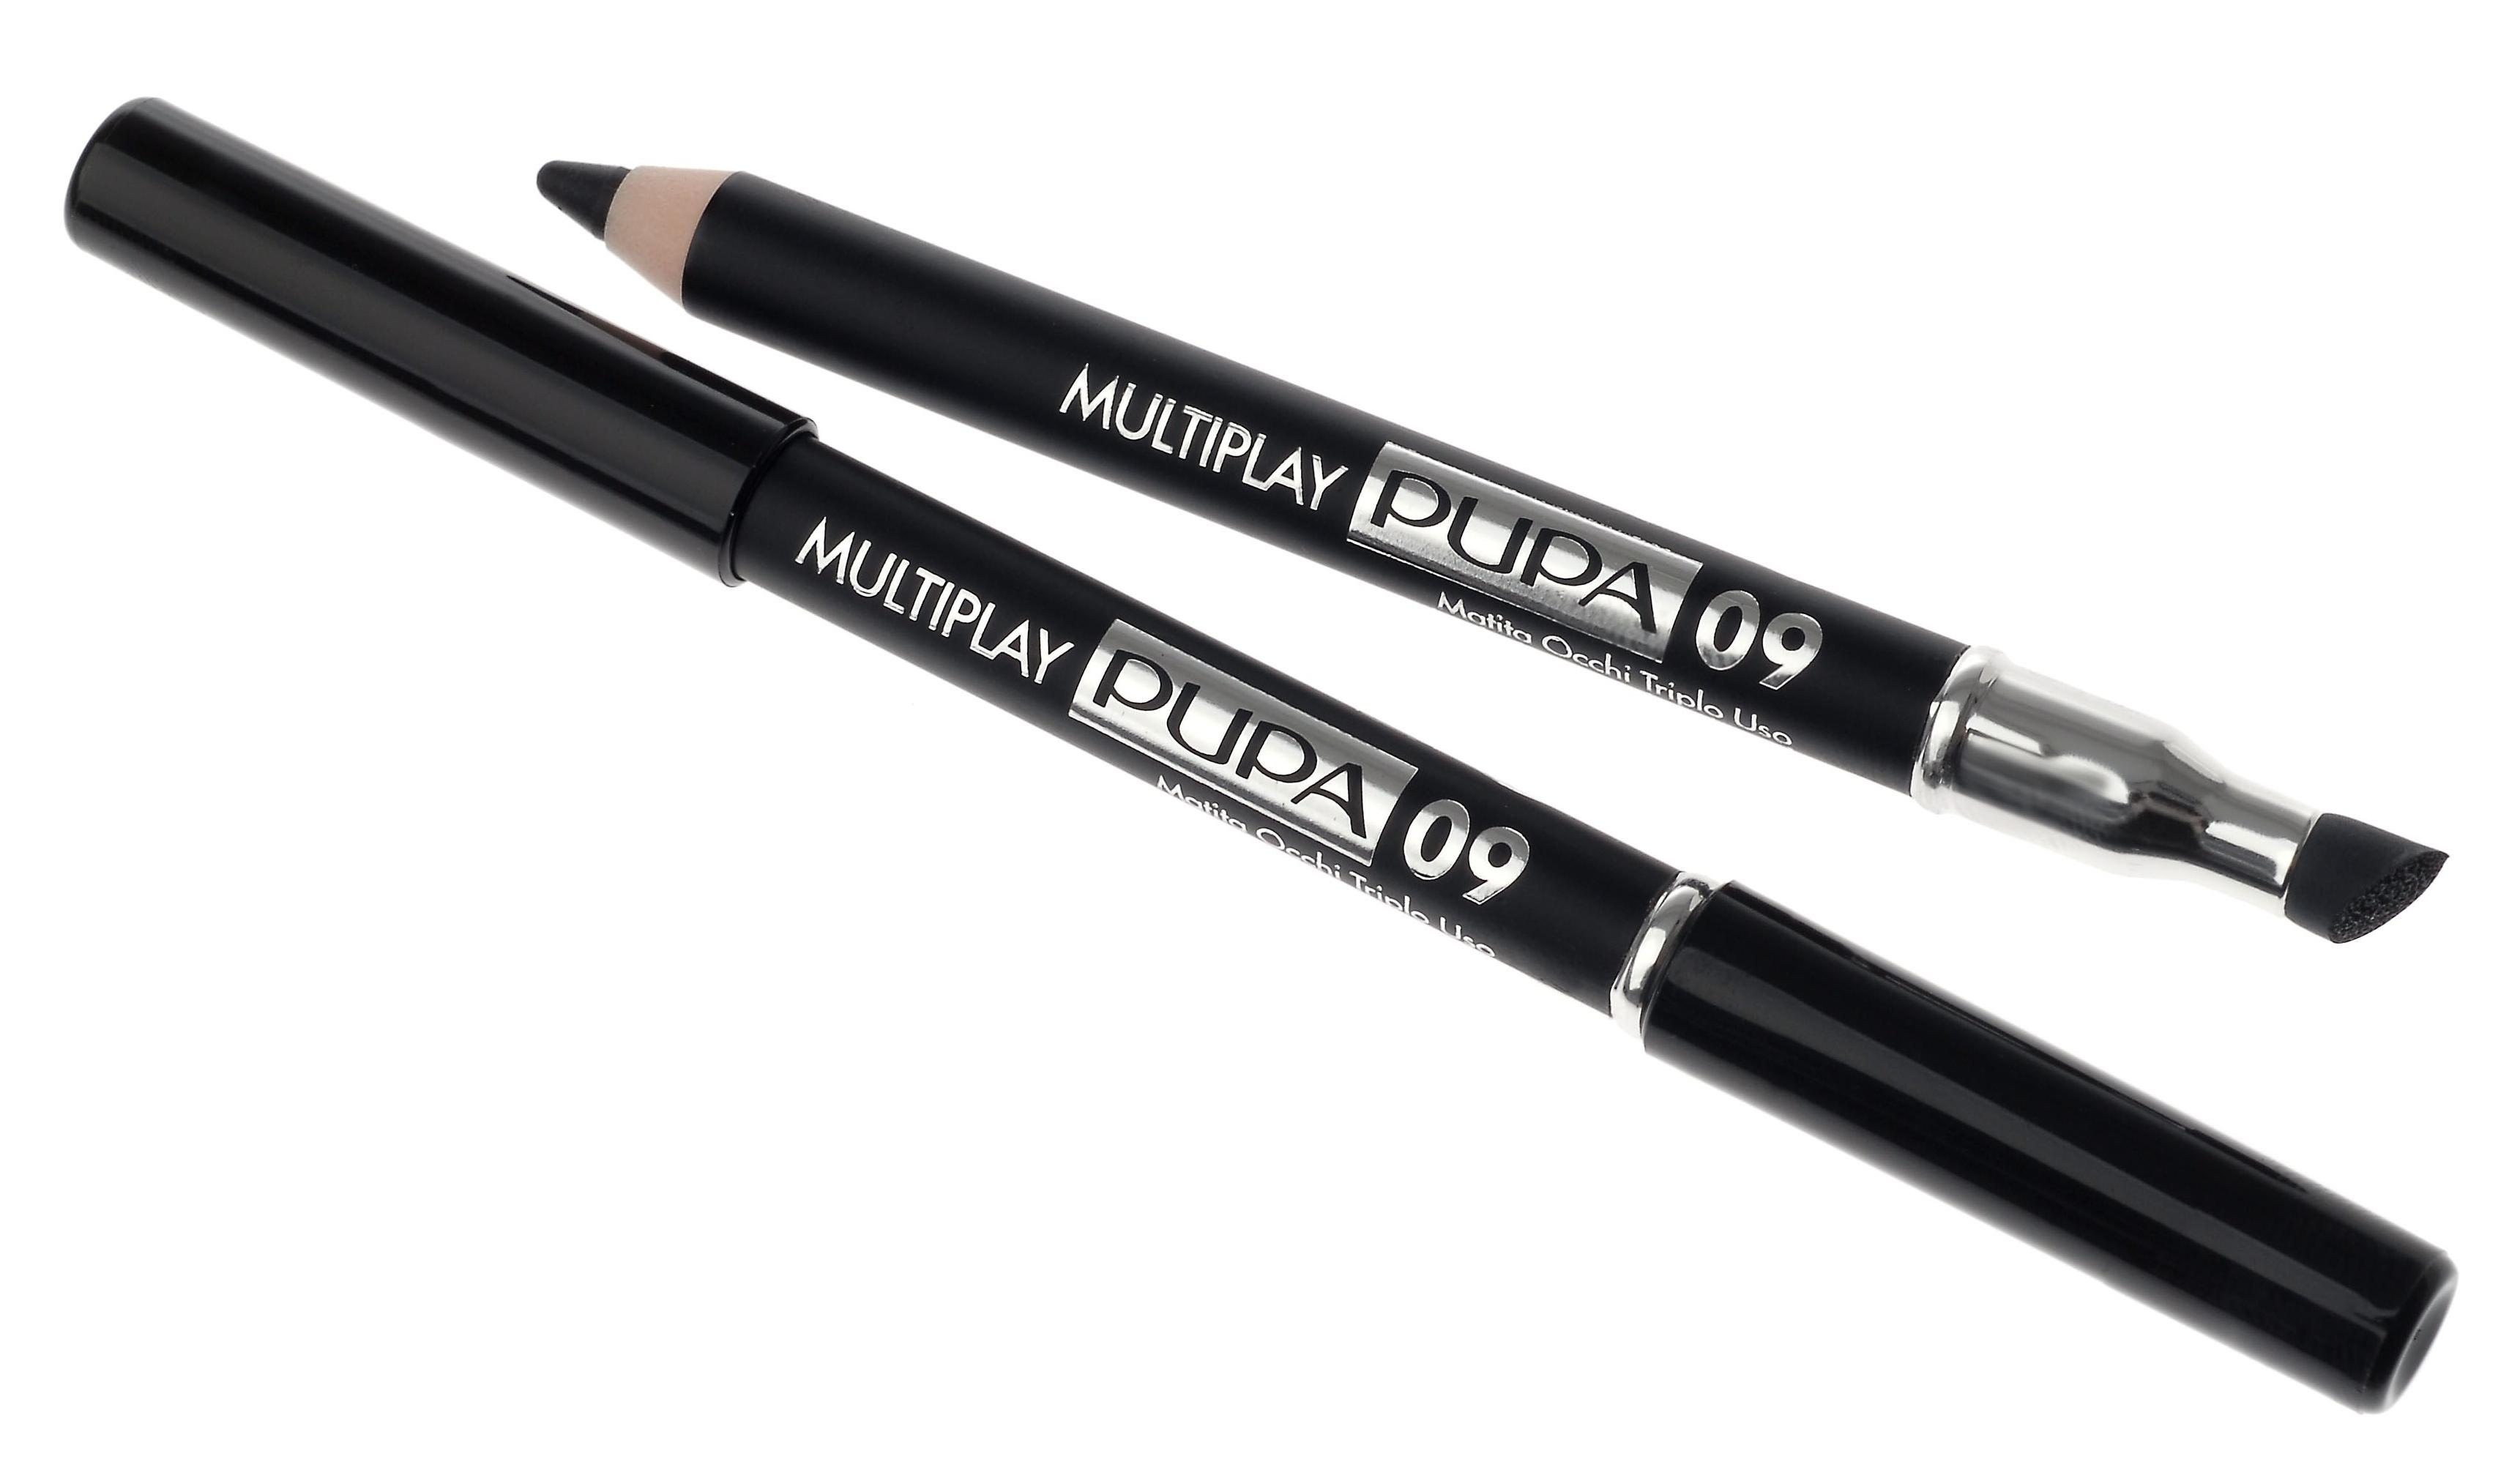 PUPA Карандаш с аппликатором для век 09 / Multiplay Eye Pencil карандаш для век с аппликатором pupa multiplay eye pencil тон 08 basic brun 244008